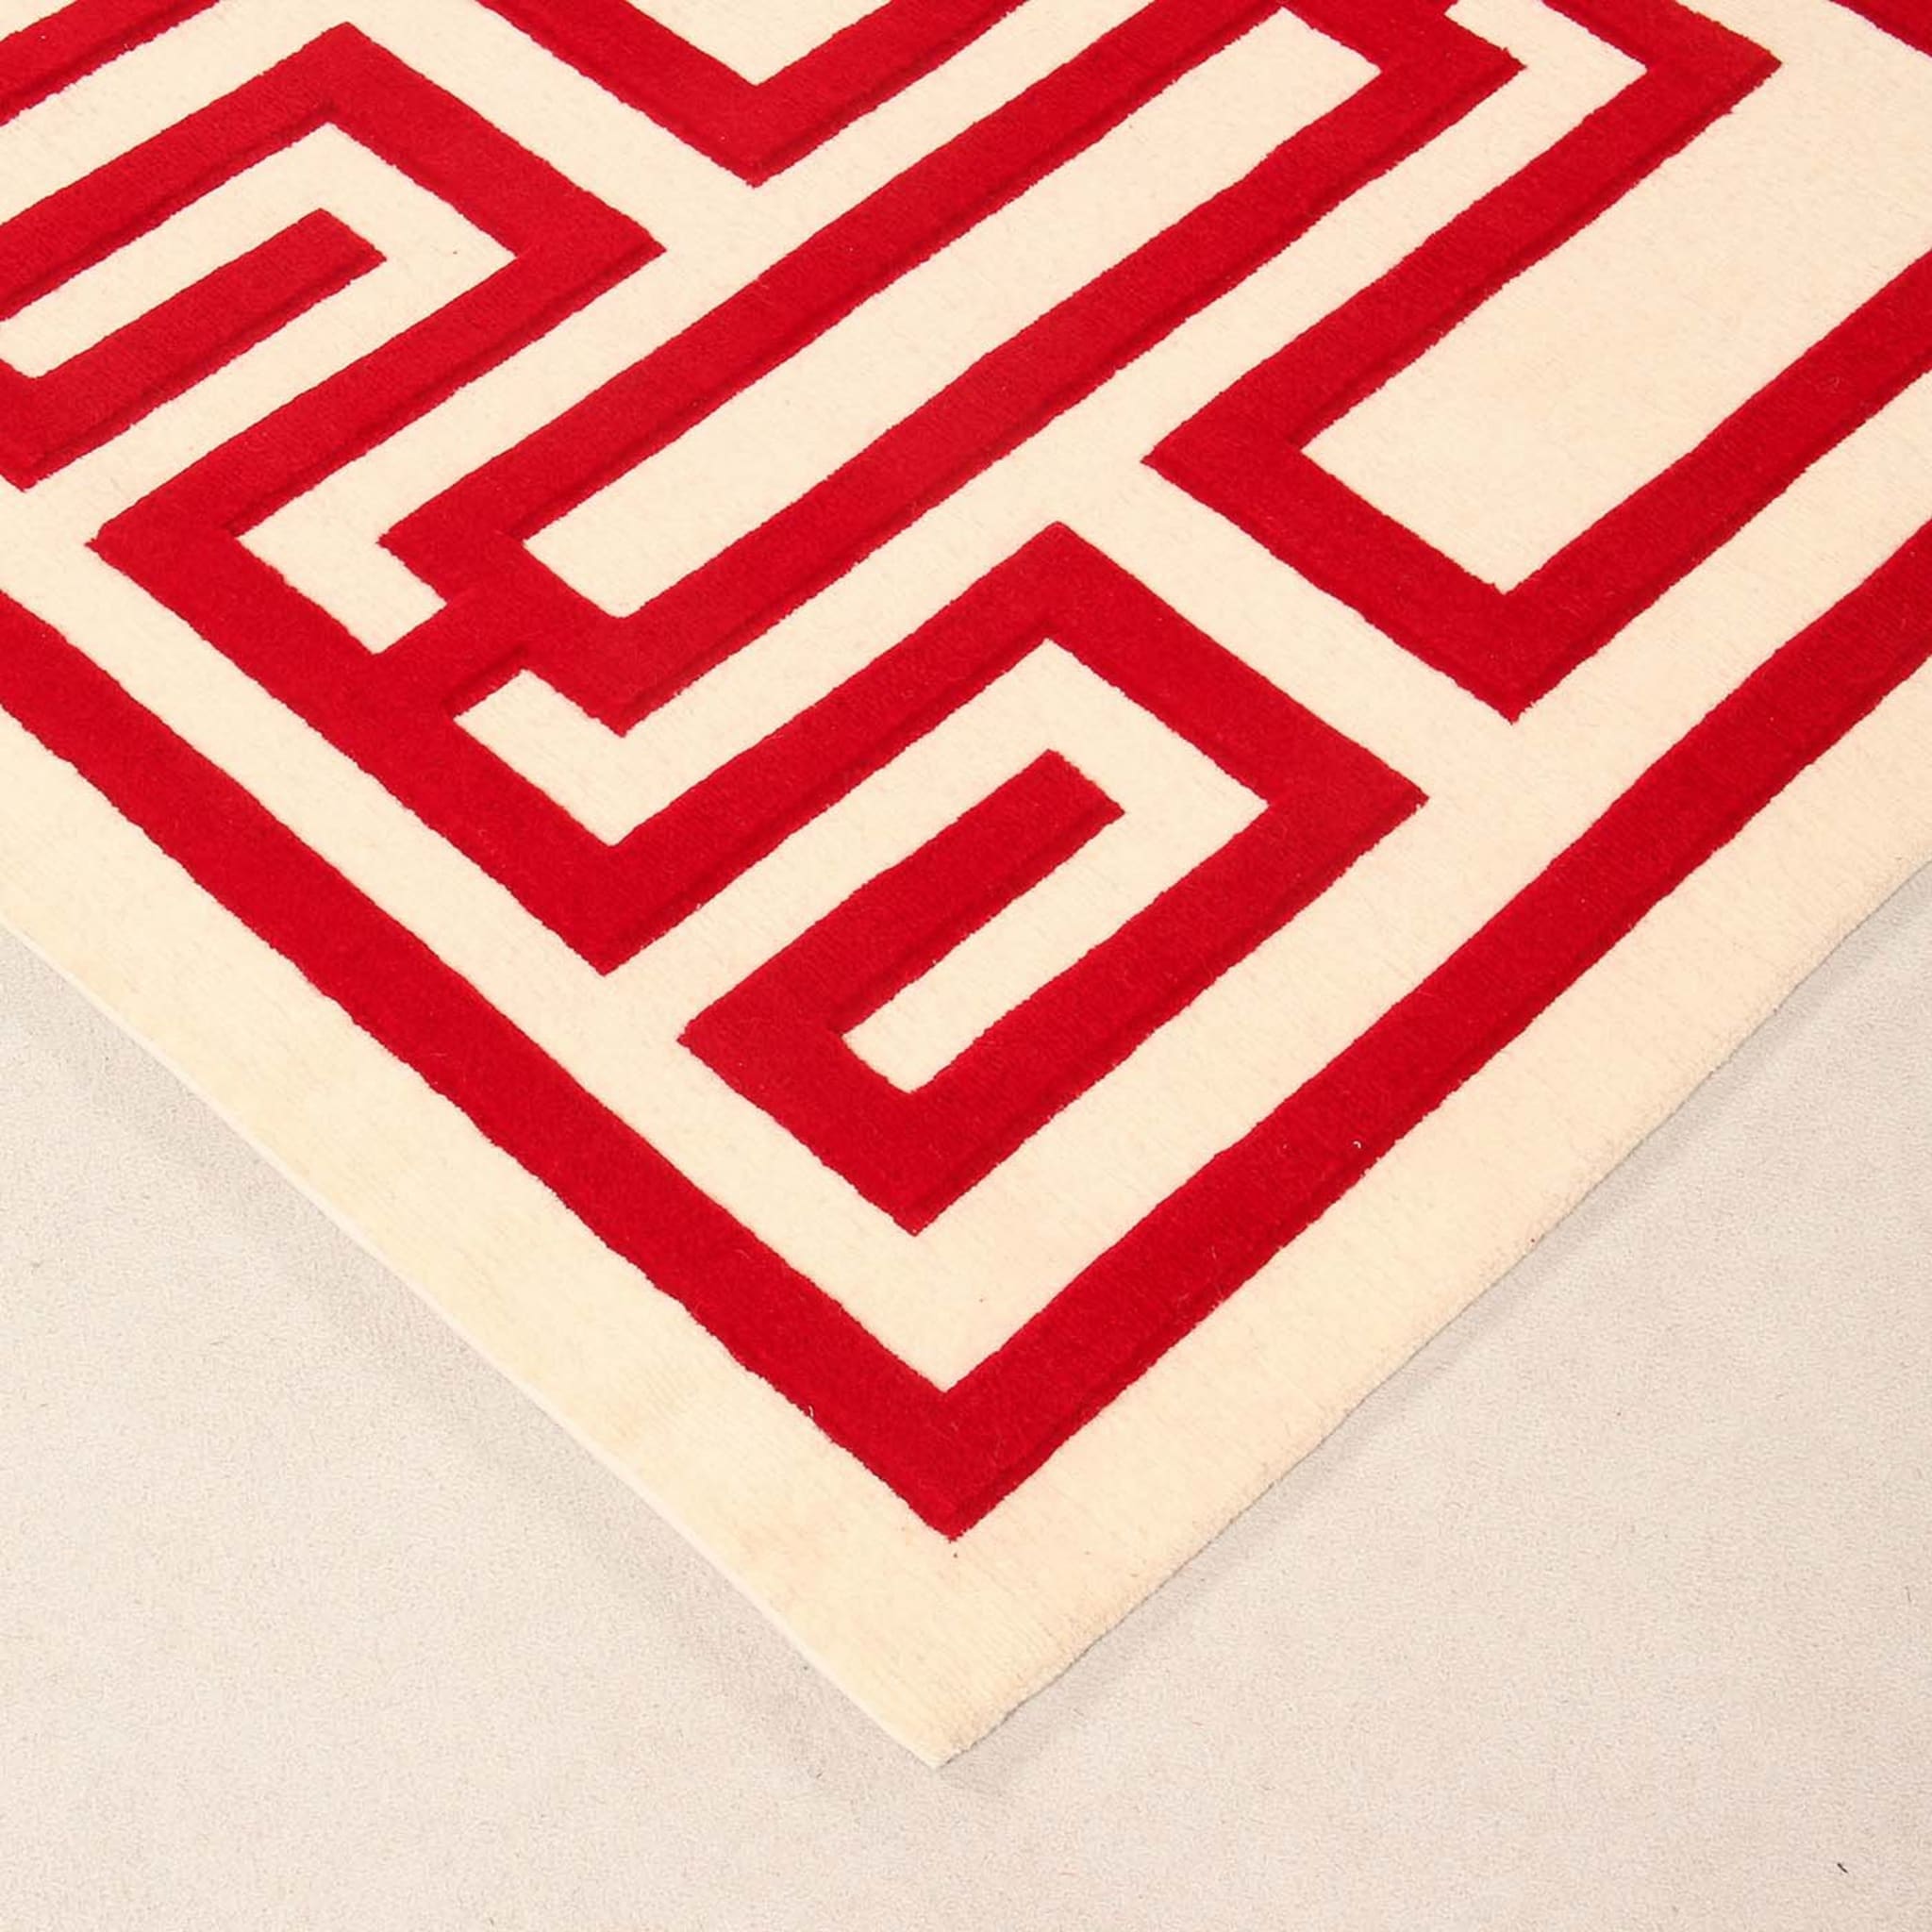 Labirinto Red Carpet by Gio Ponti - Alternative view 1